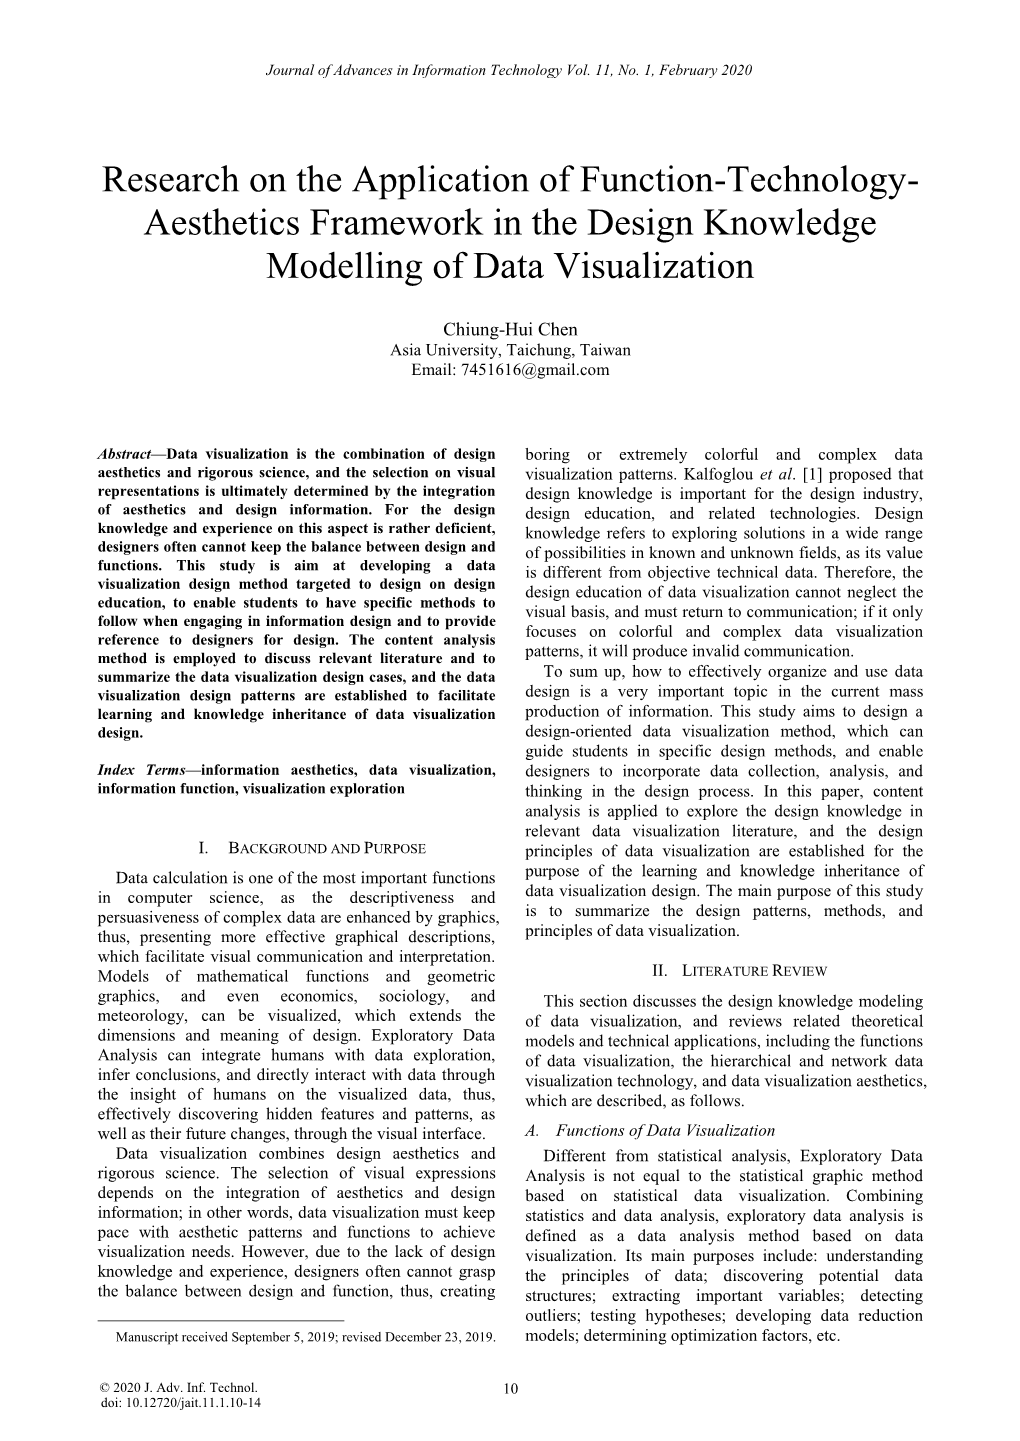 Aesthetics Framework in the Design Knowledge Modelling of Data Visualization